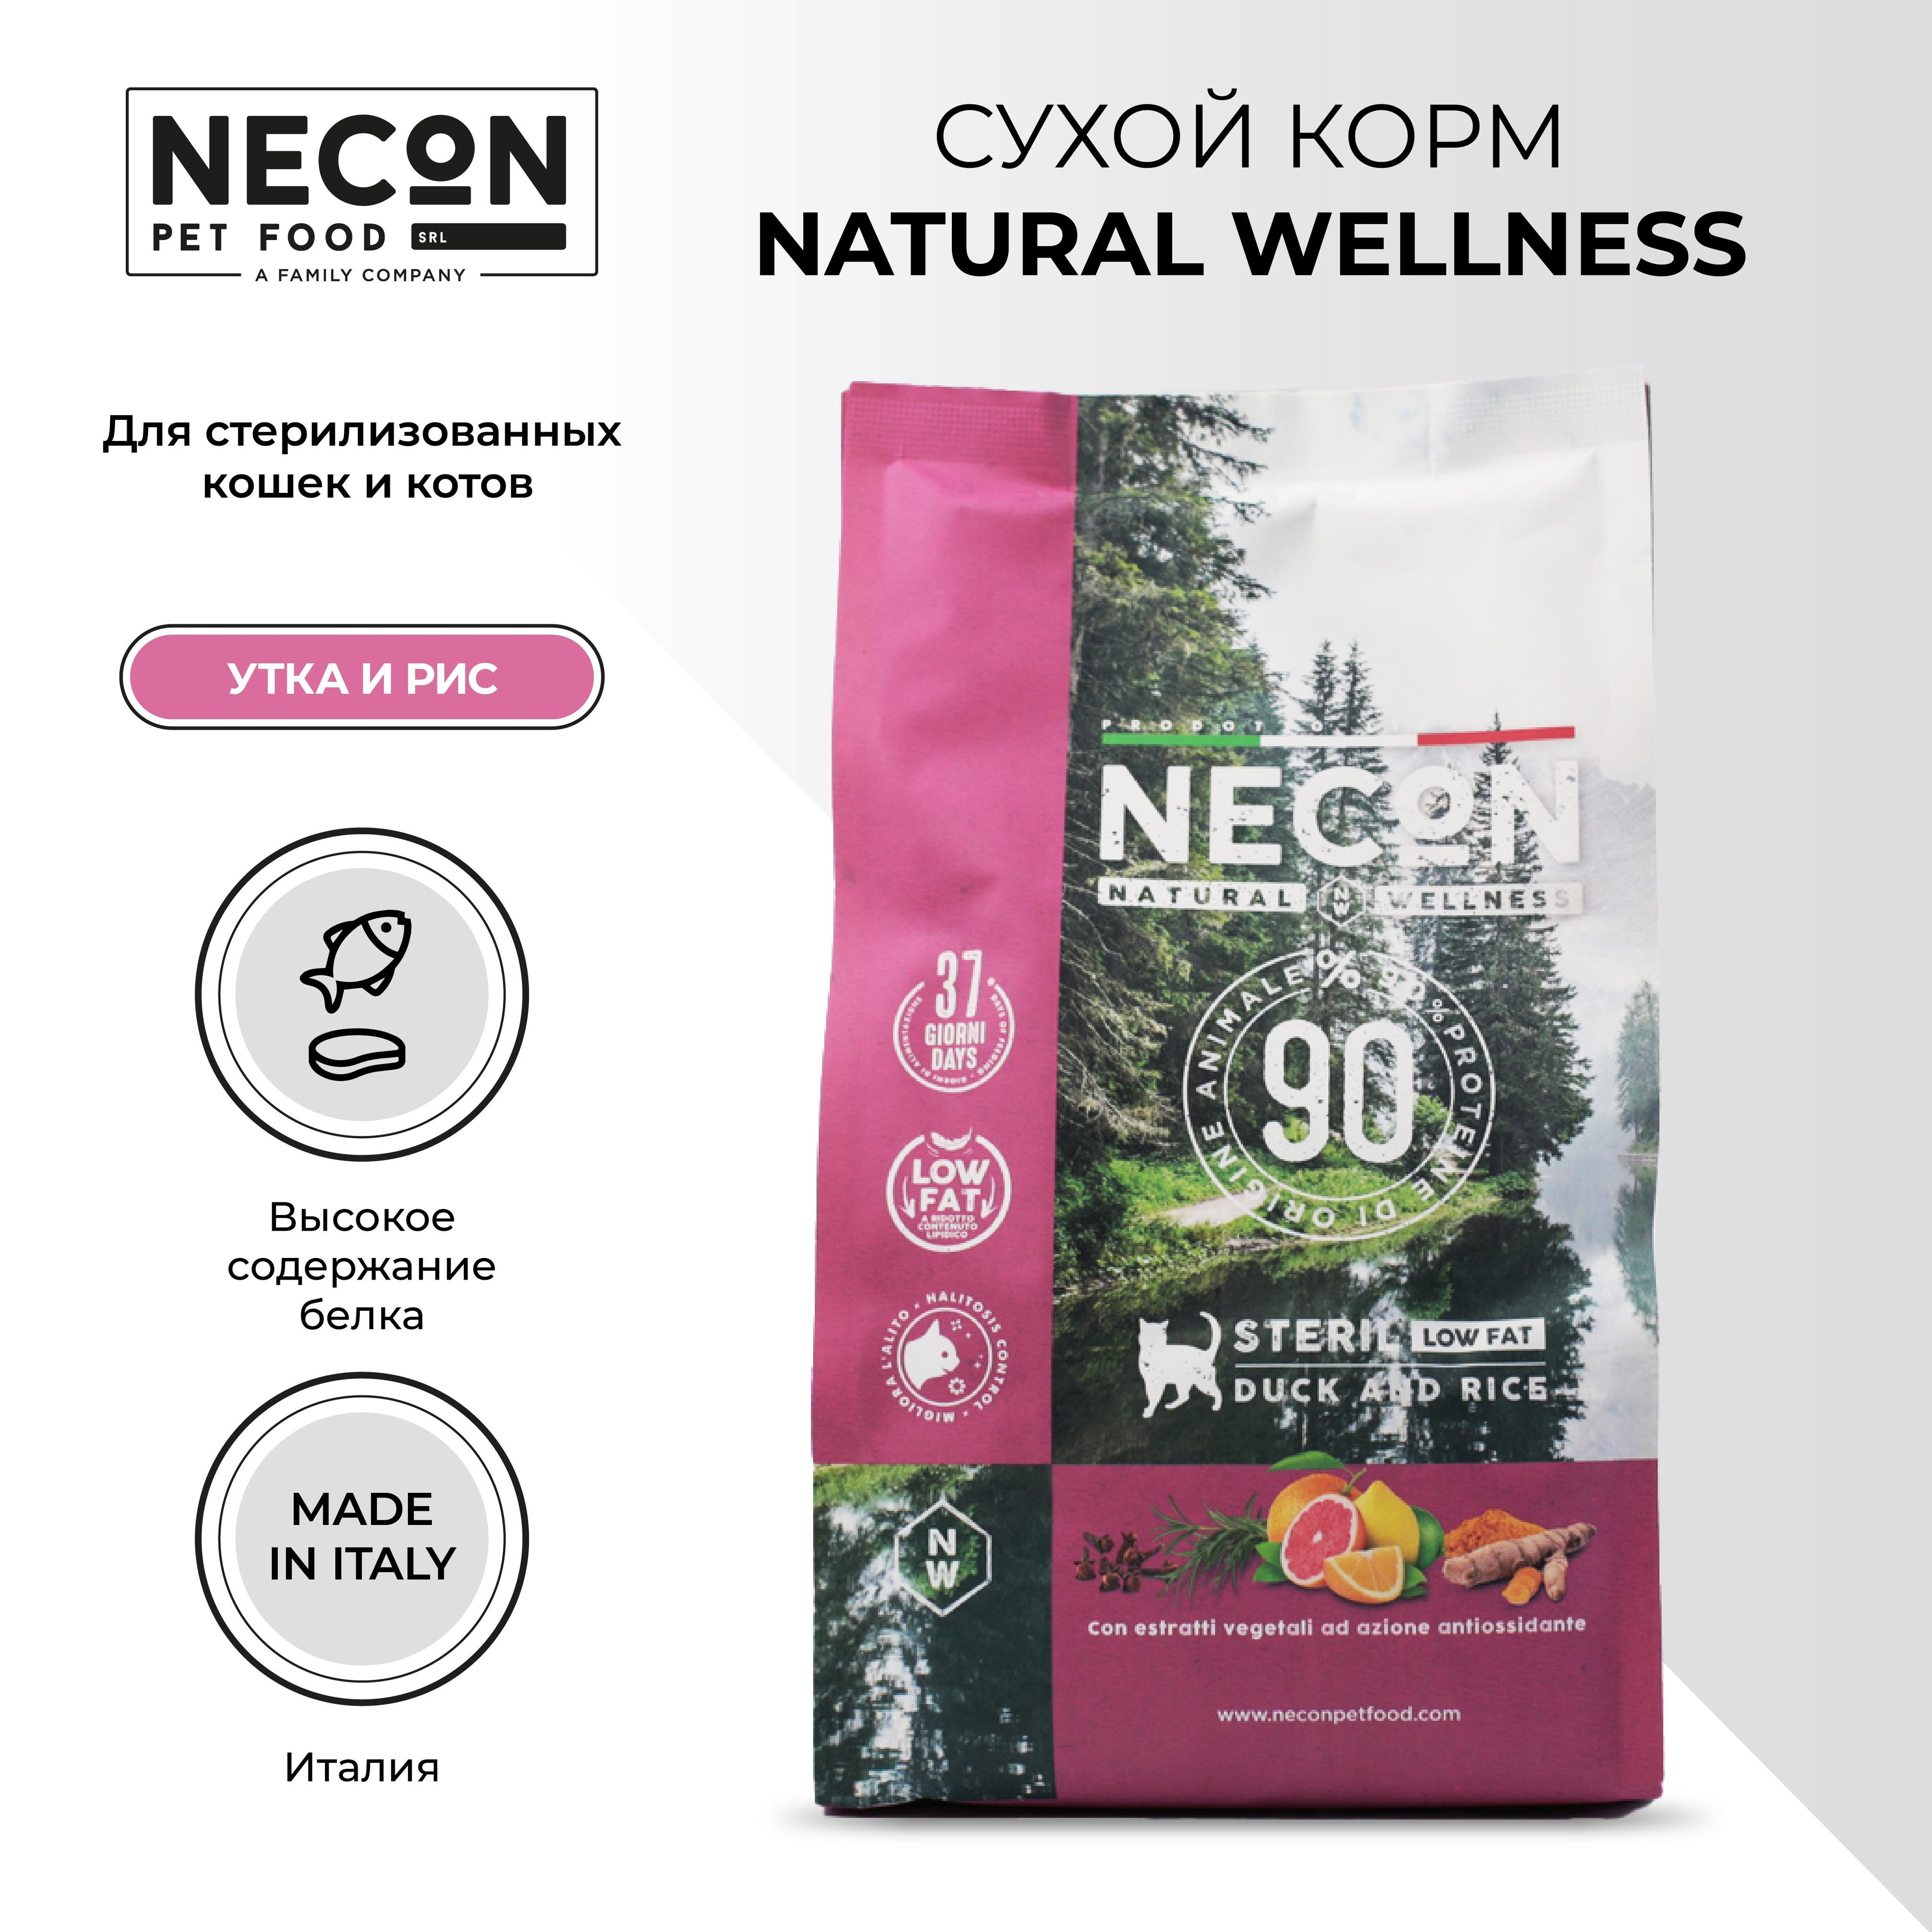 Сухой корм для кошек Necon Natural Wellness Steril Low Fat утка и рис 1,5 кг